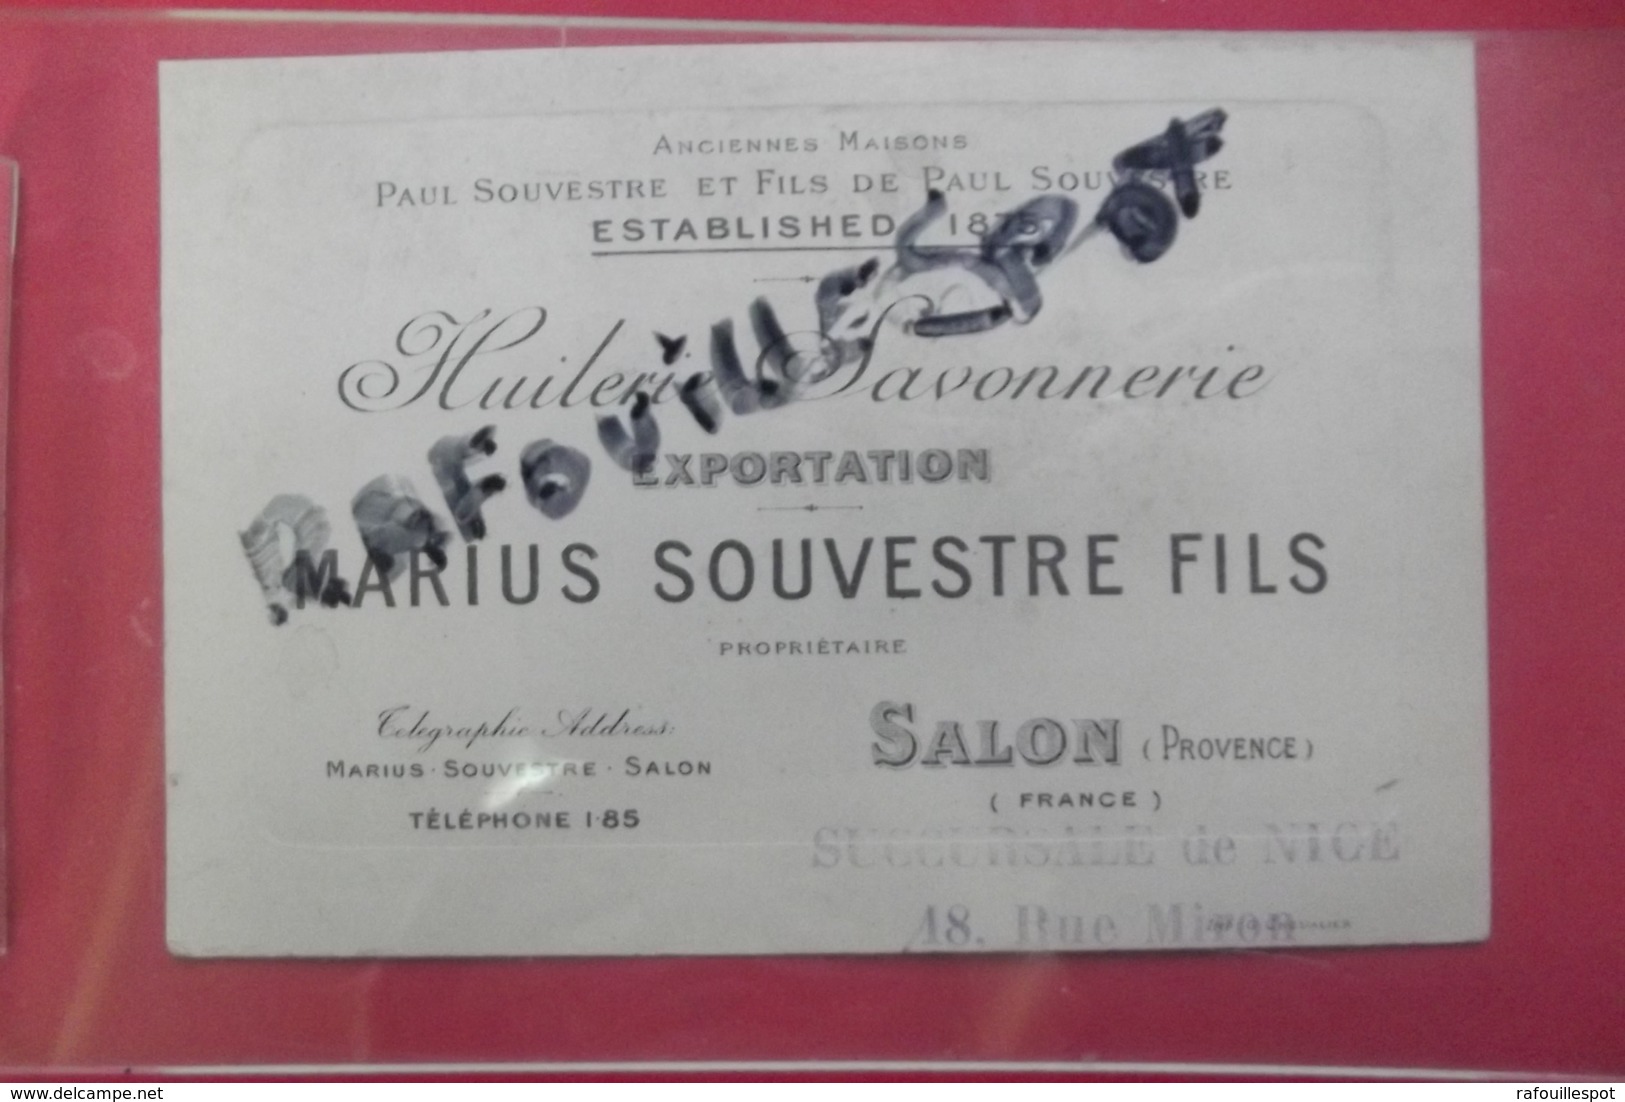 Pub Huileries Savonnerie Exportation Marius Souvestre Salon - Pubblicitari